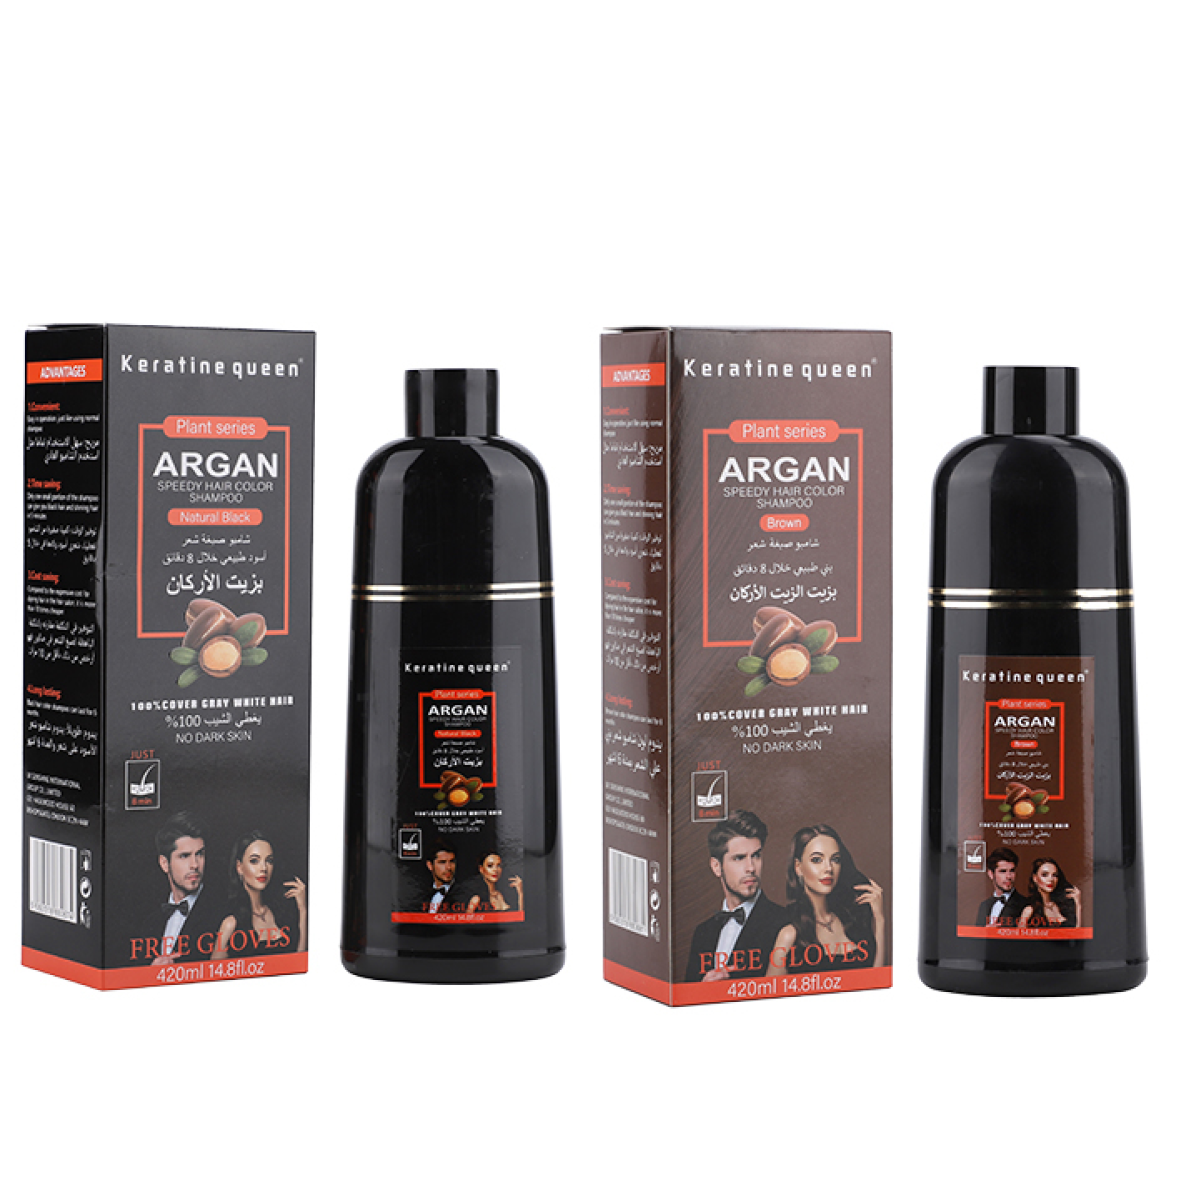 KERATIN QUEEN Argan Speedy Hair Dye Shampoo 420ml / 14.8 fl oz (2 options)